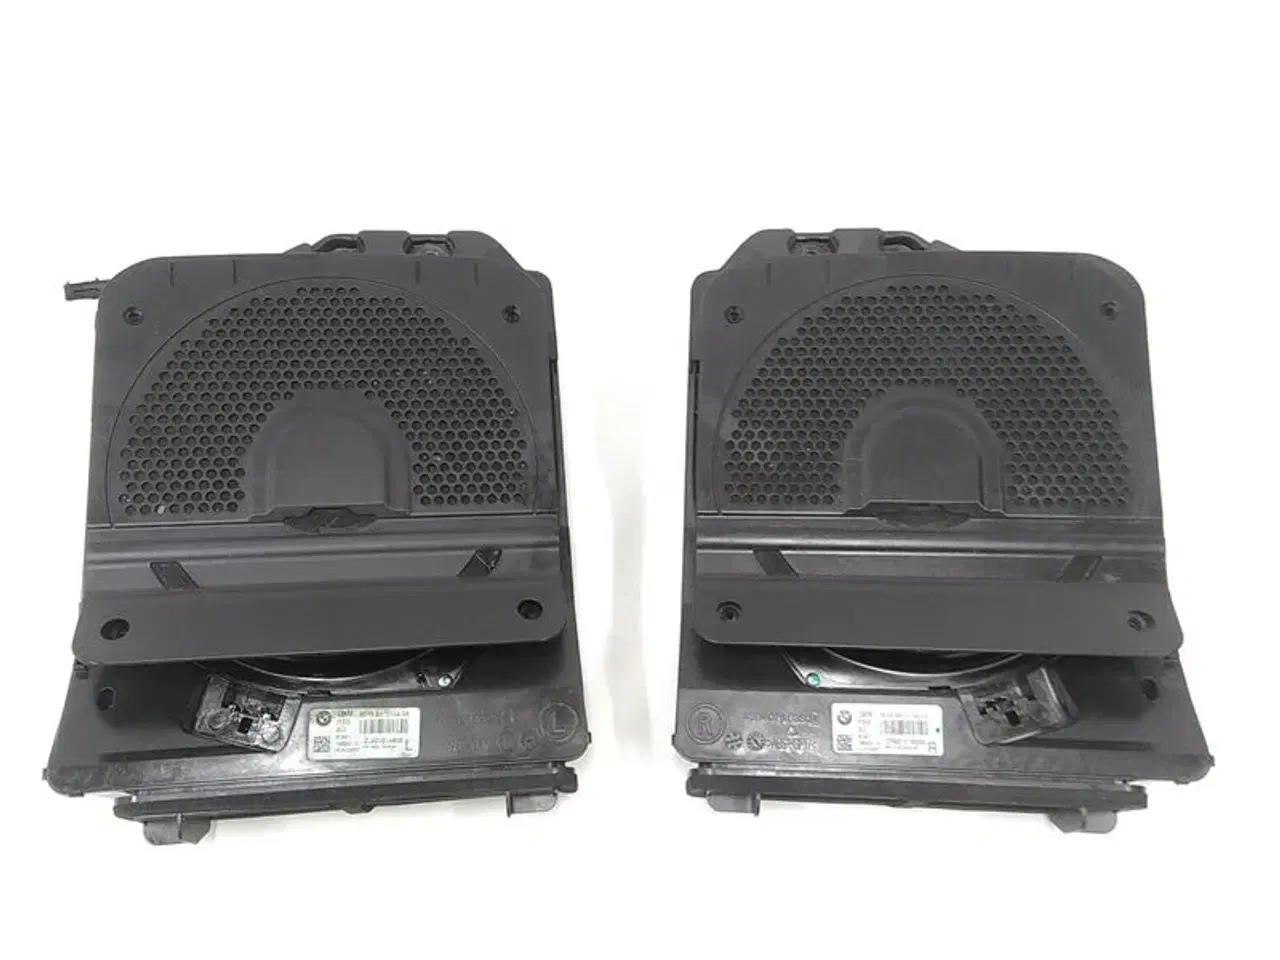 Billede 39 - højtaler sæt til S676A HiFi speaker system K23814 F30 F31 F34GT F32 F33 F35 F36 F80 M3 F82 M4 F83 M4 cabriolet F30 LCI F31 LCI F80 LCI M3 F35 LCI F34